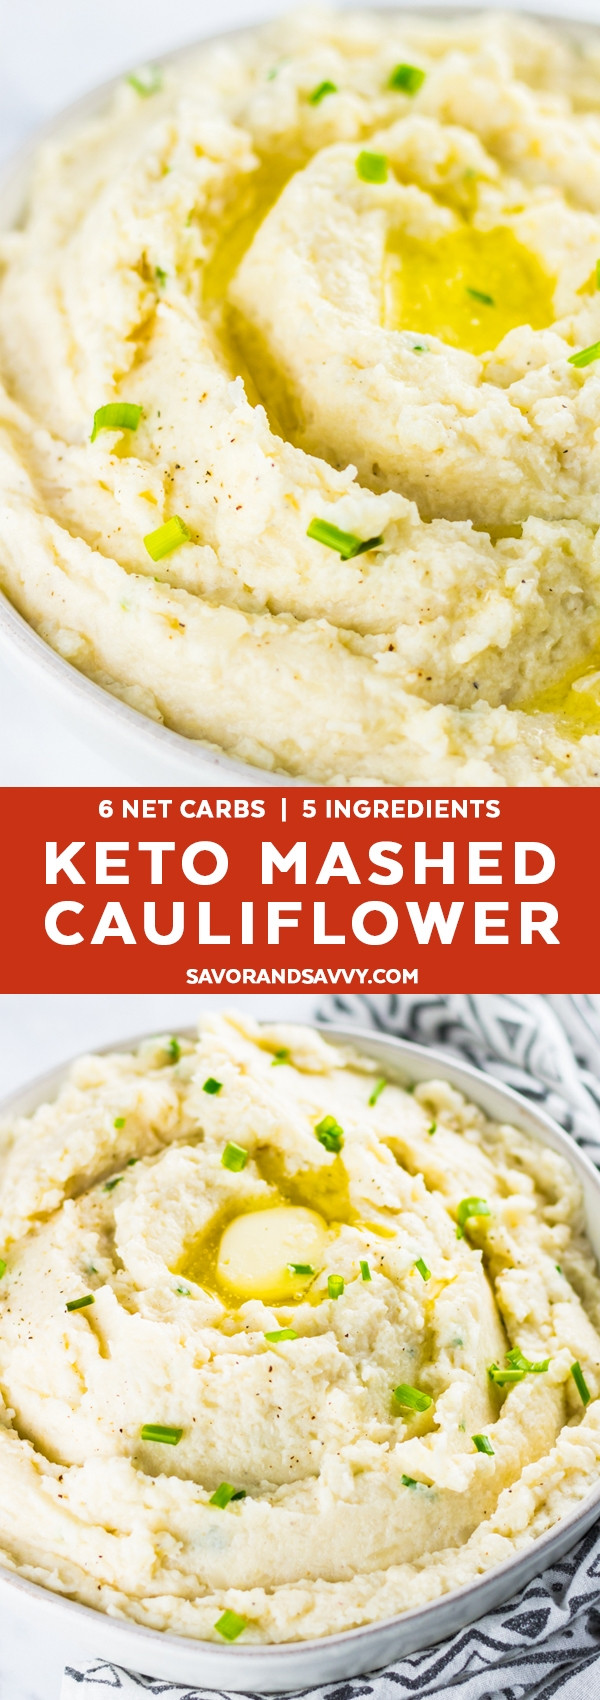 Creamed Cauliflower Keto
 Keto Mashed Cauliflower Recipe